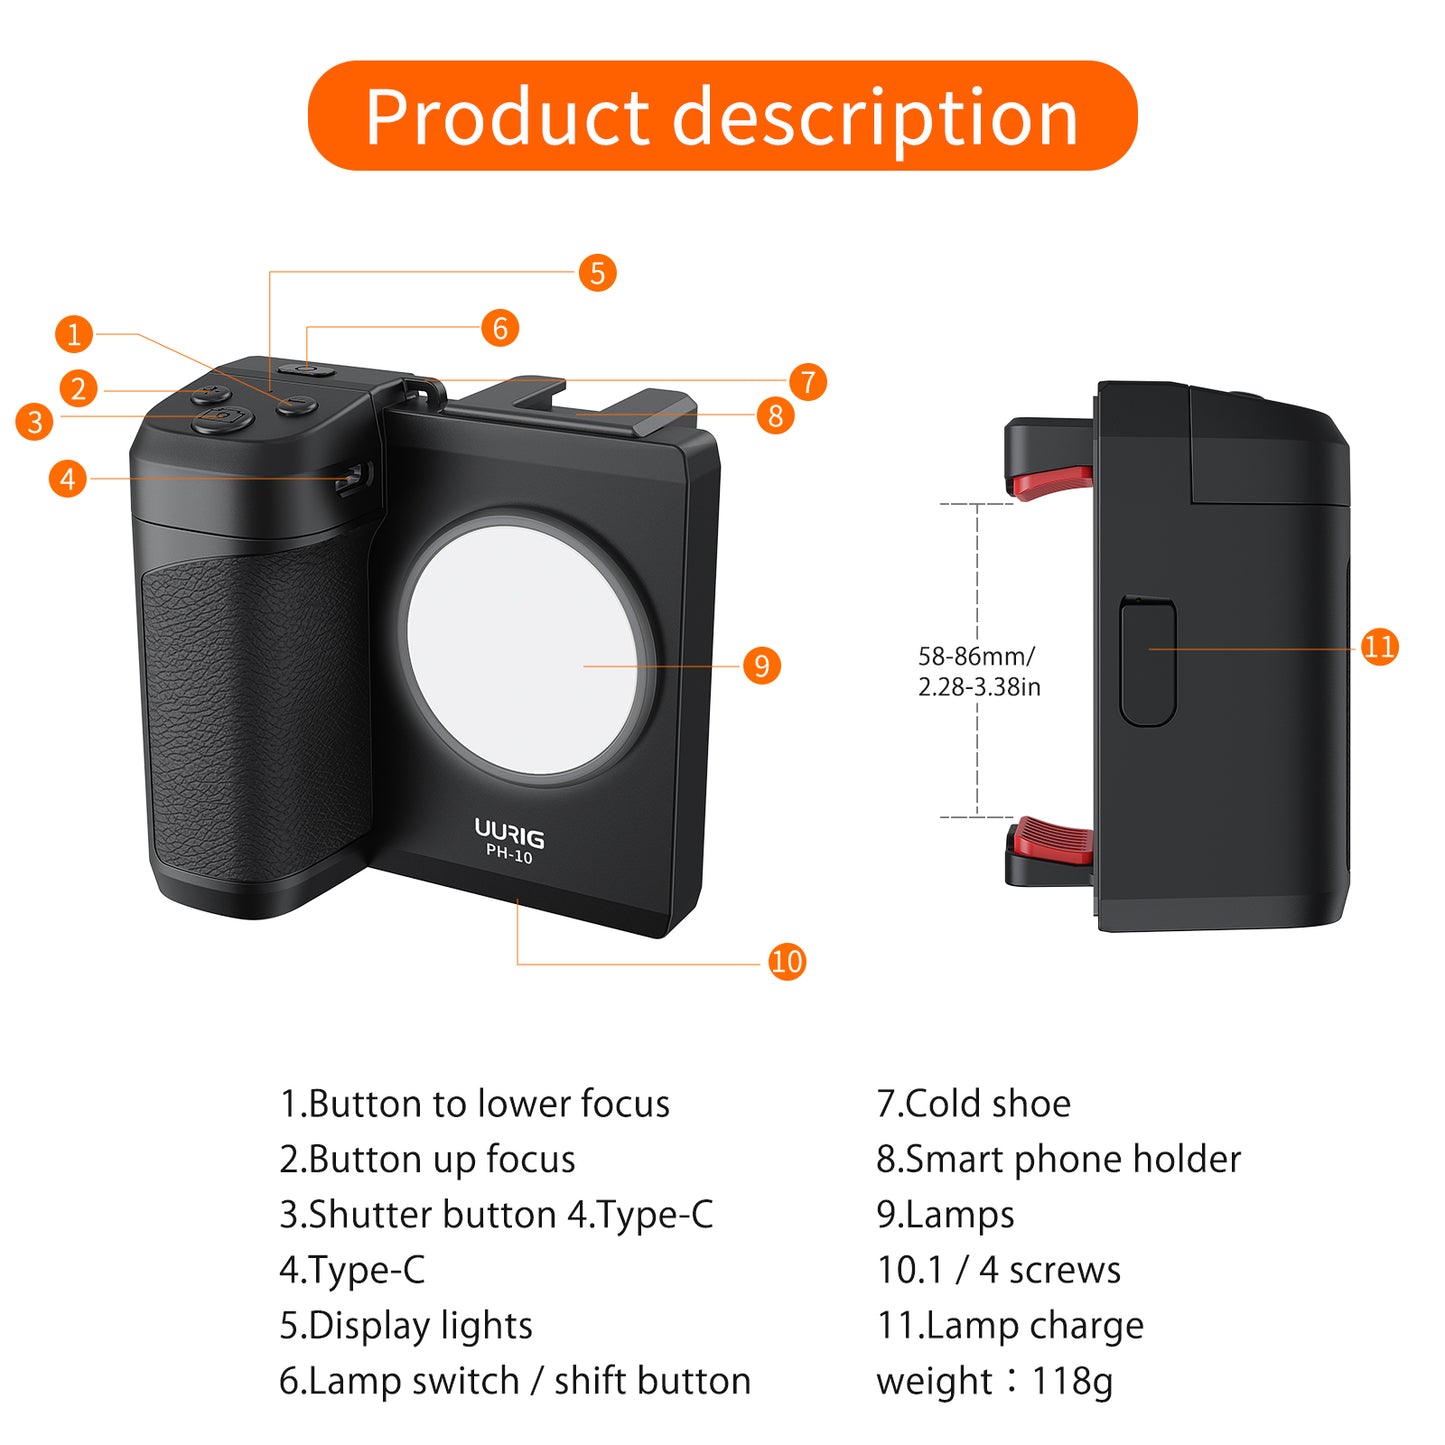 UURIG PH-10 Smartphone Camera Shutter Remote Handle Grip with LED light